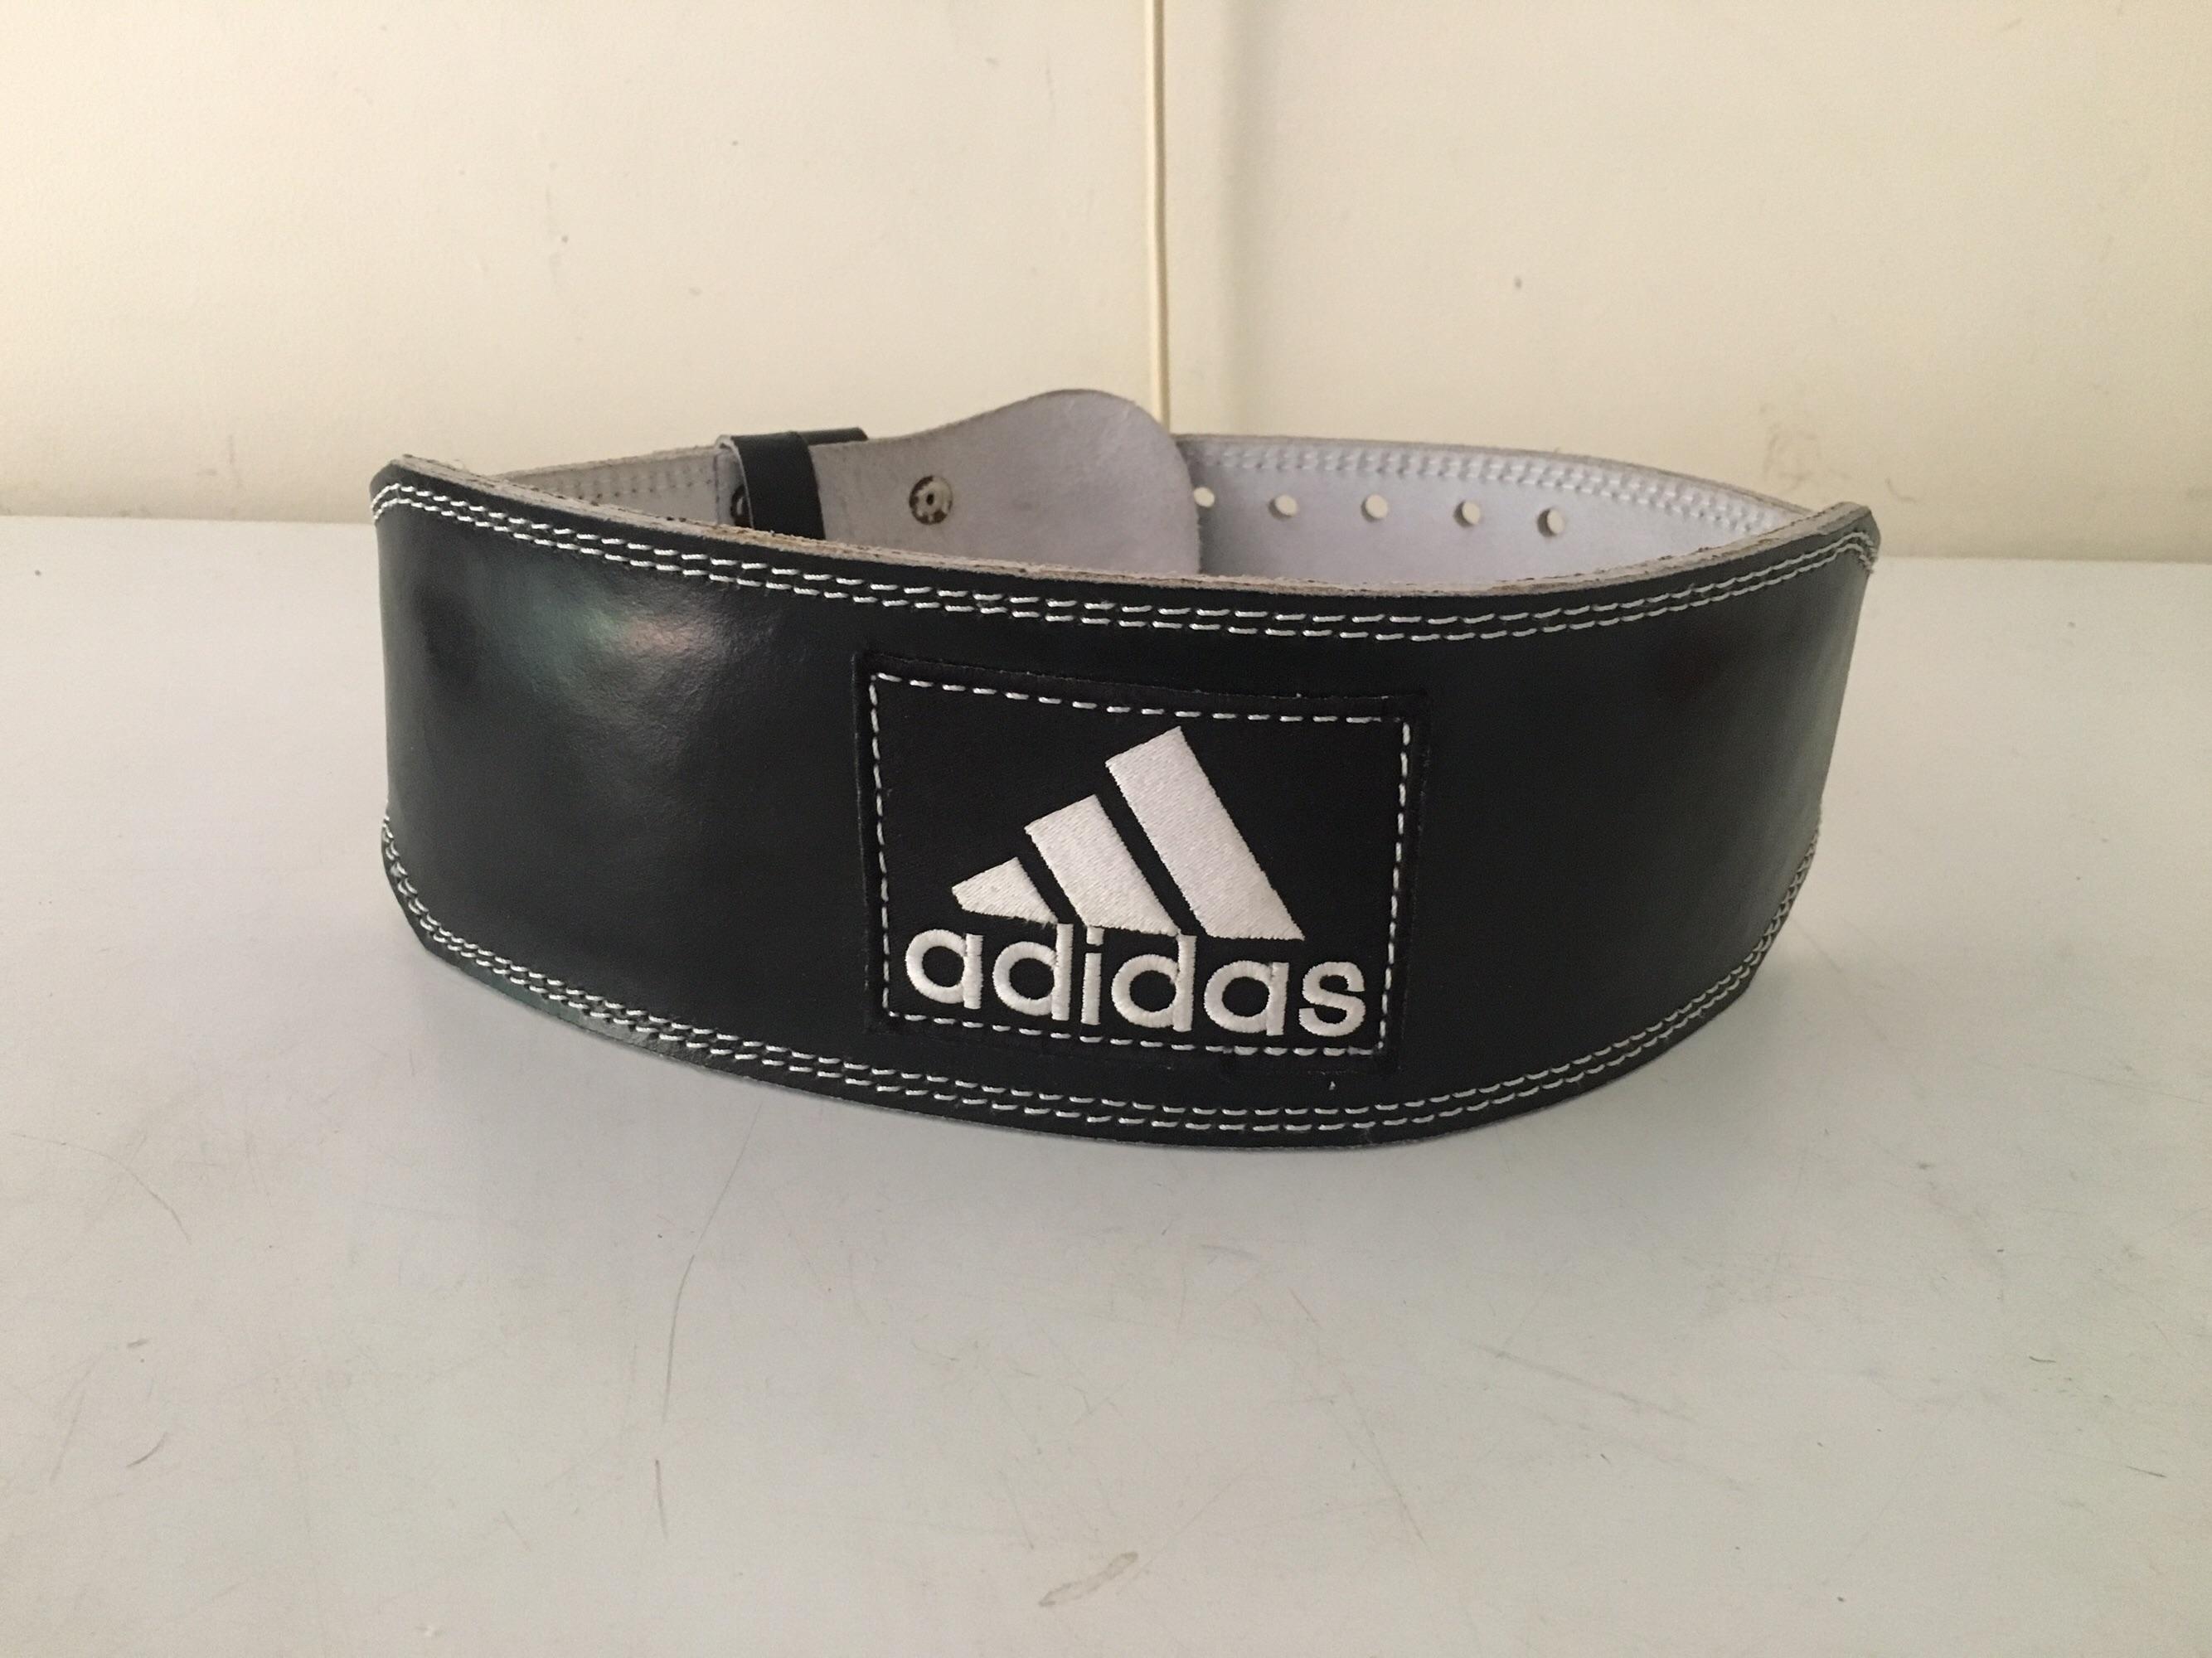 adidas weight lifting leather belt